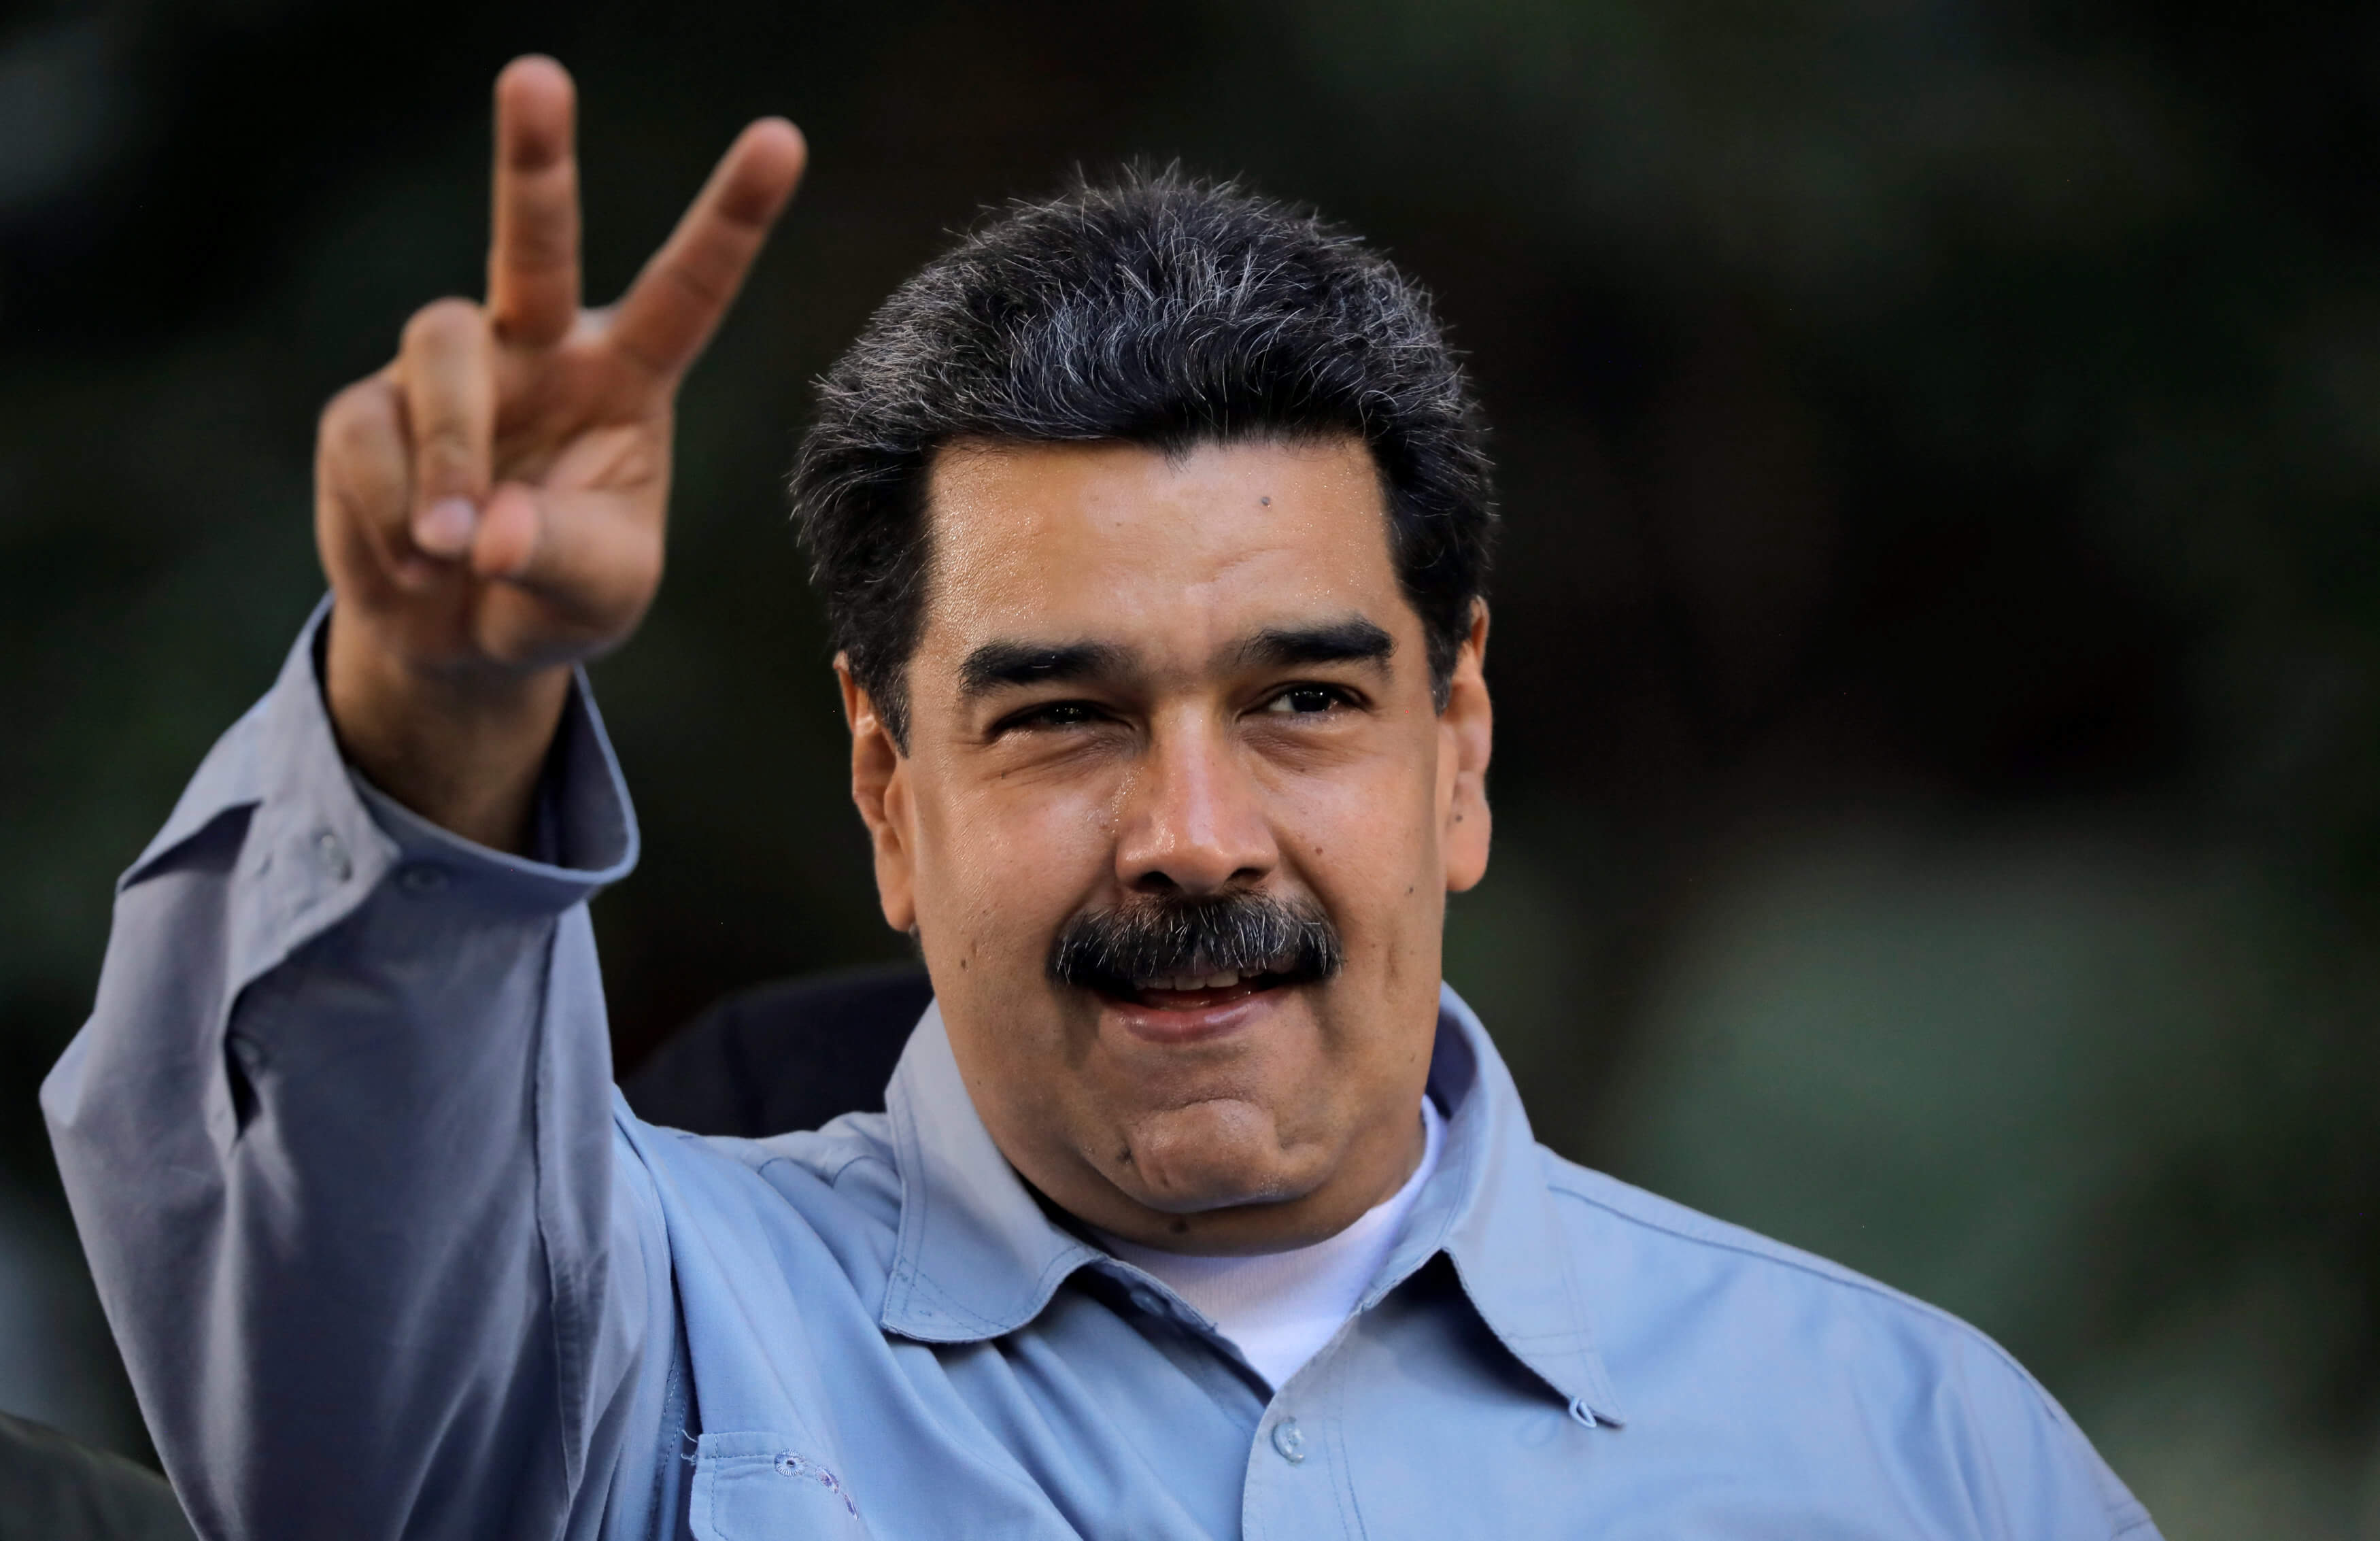 Мадуро. Николас Мадуро. Венесуэла Мадуро. Николас Мадуро фото. Президент Венесуэлы Мадуро фото.